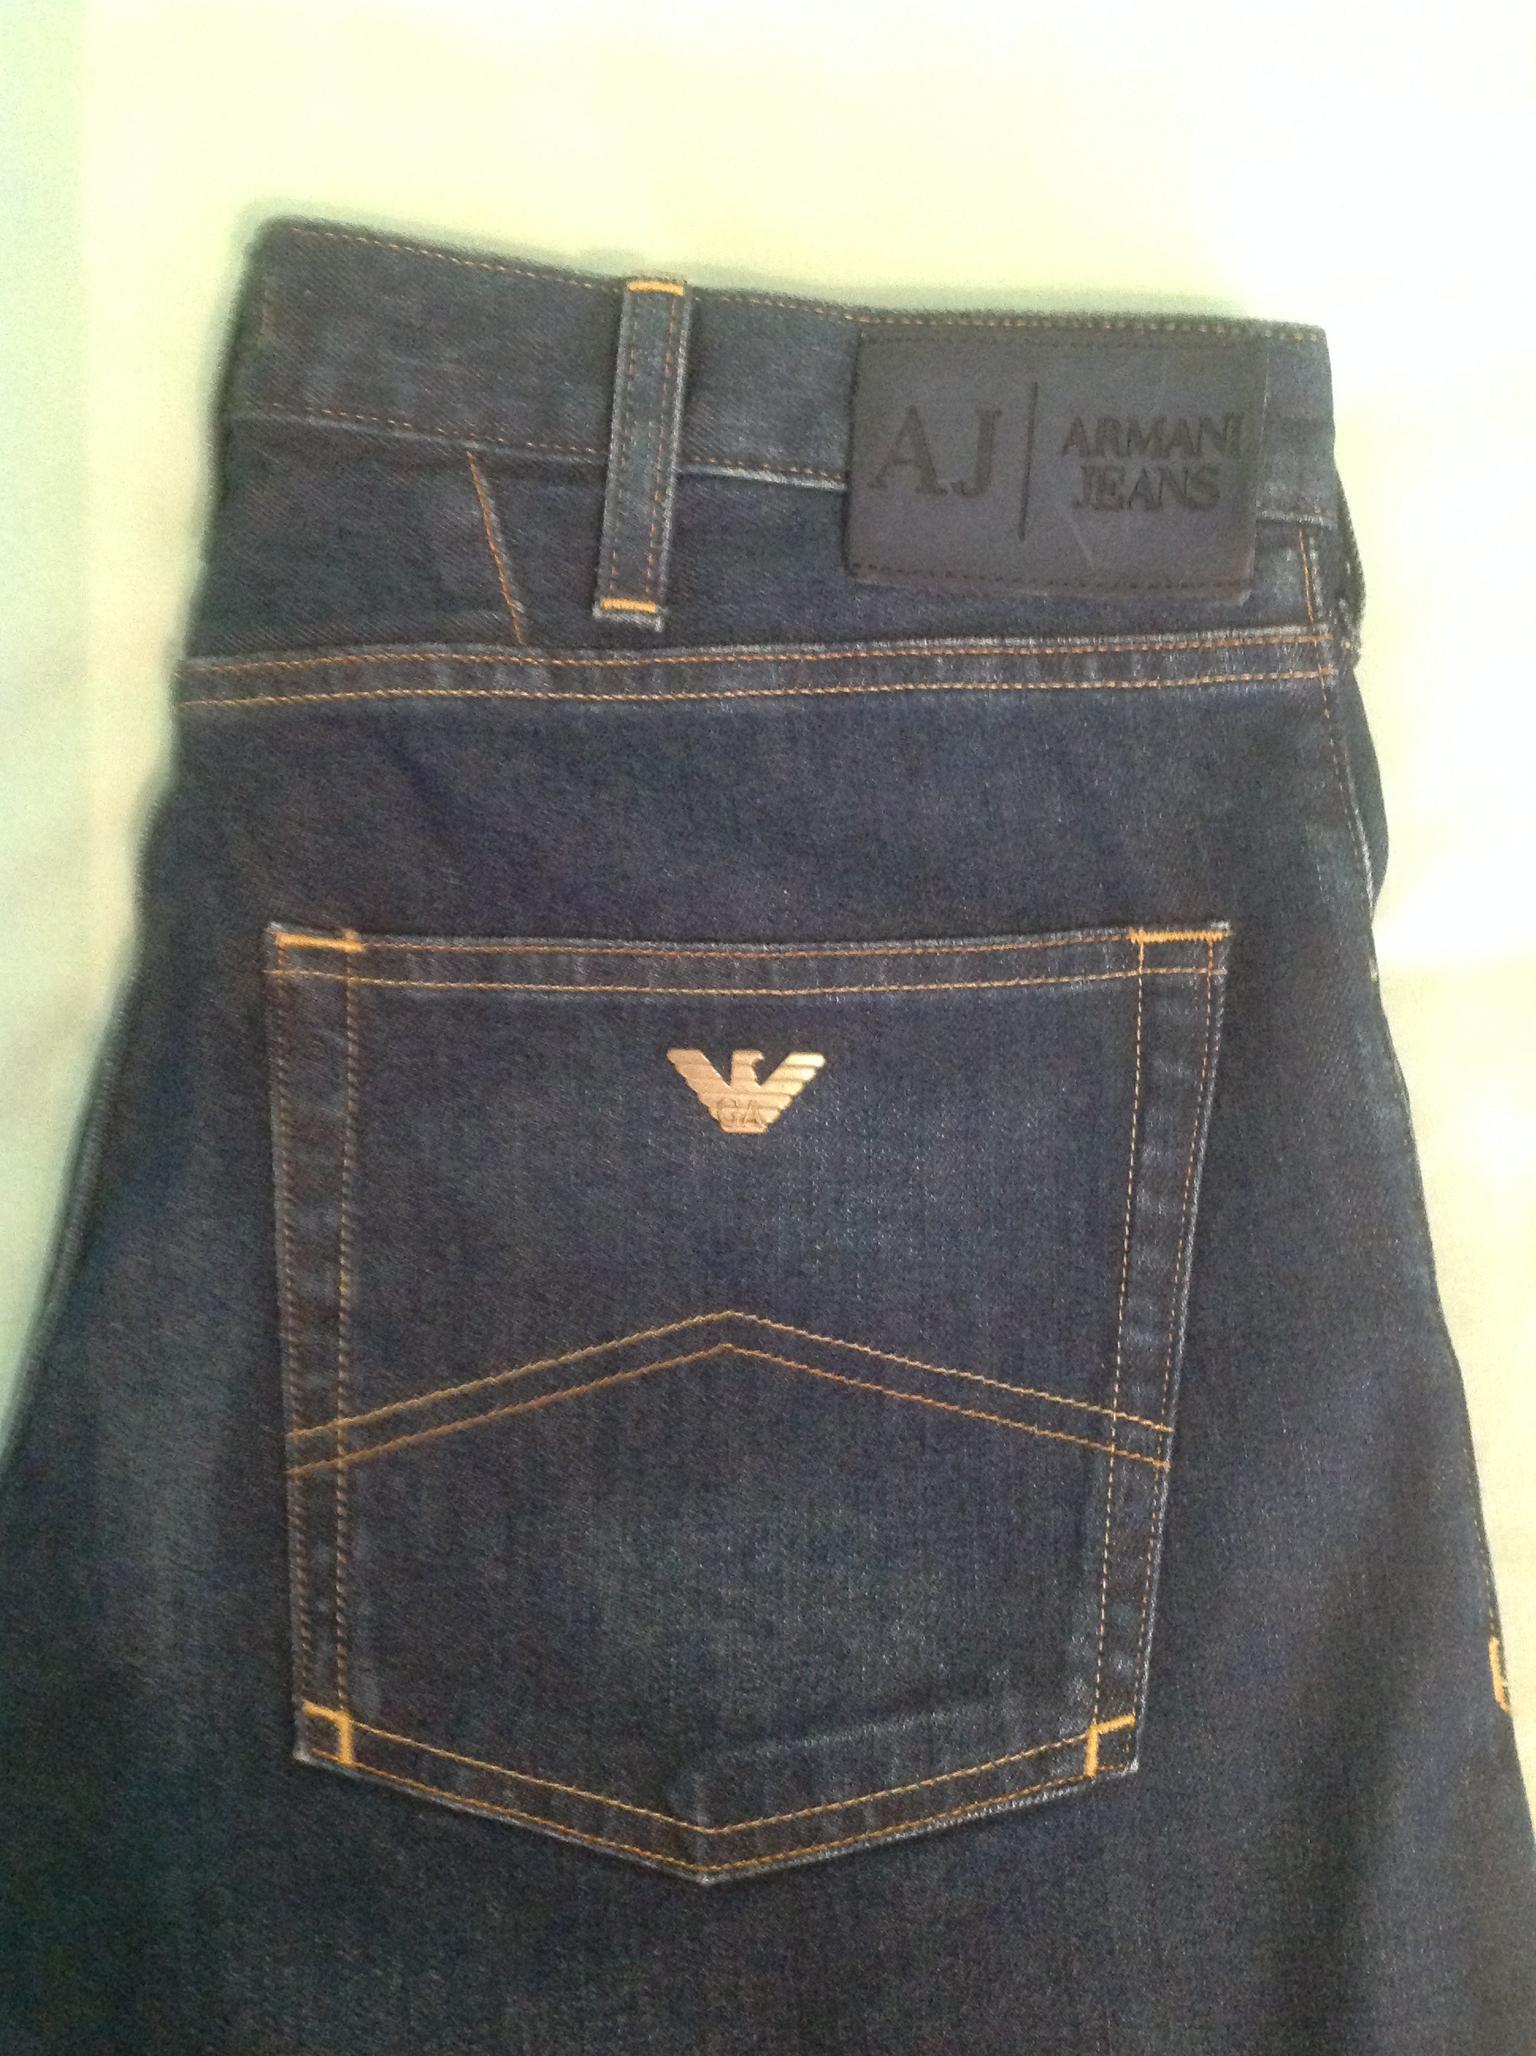 armani j45 jeans sale